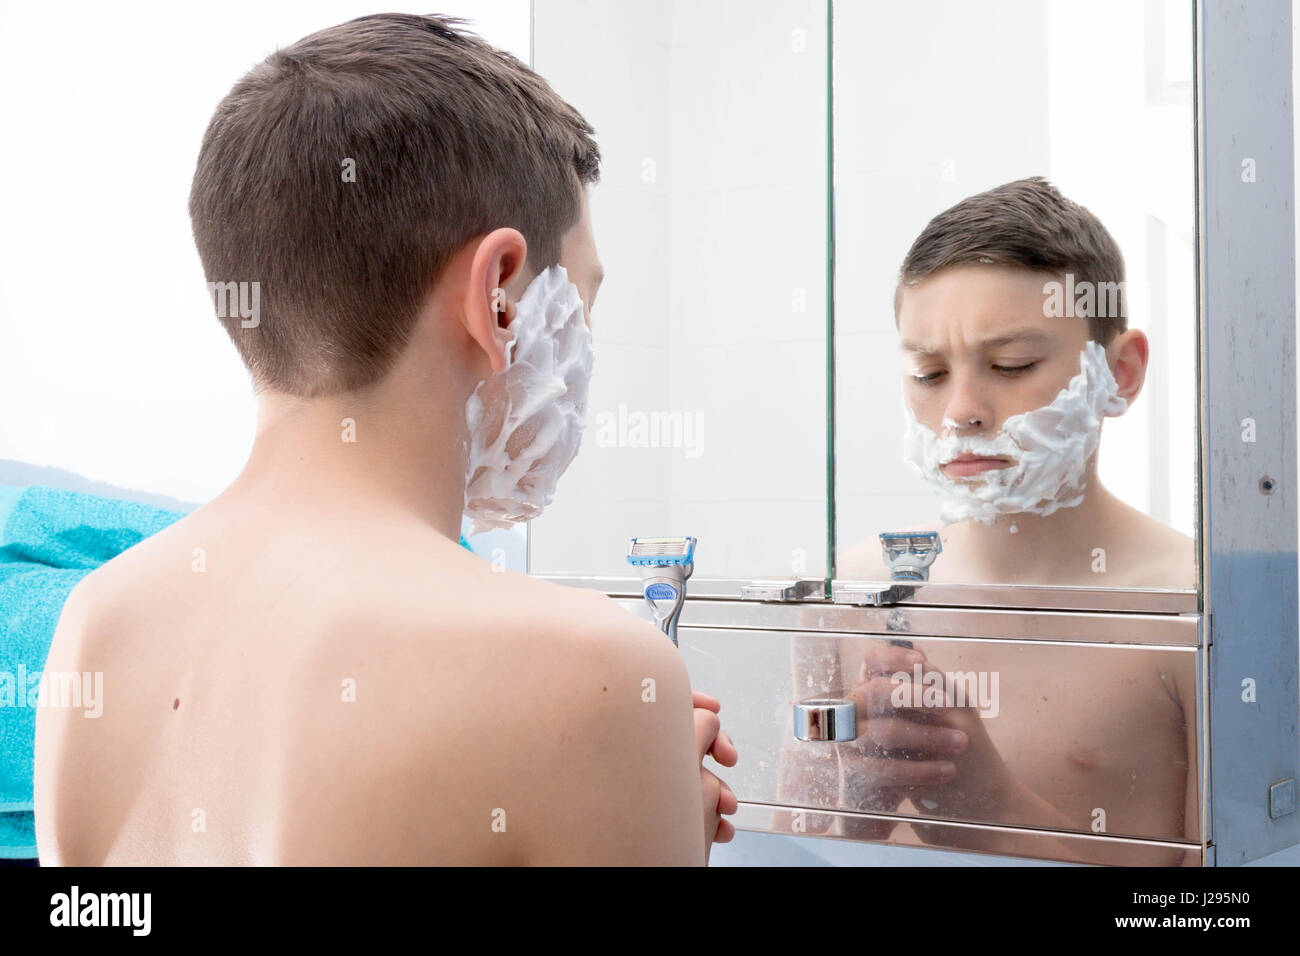 Junge Teenager zum ersten Mal rasieren Stockfotografie - Alamy